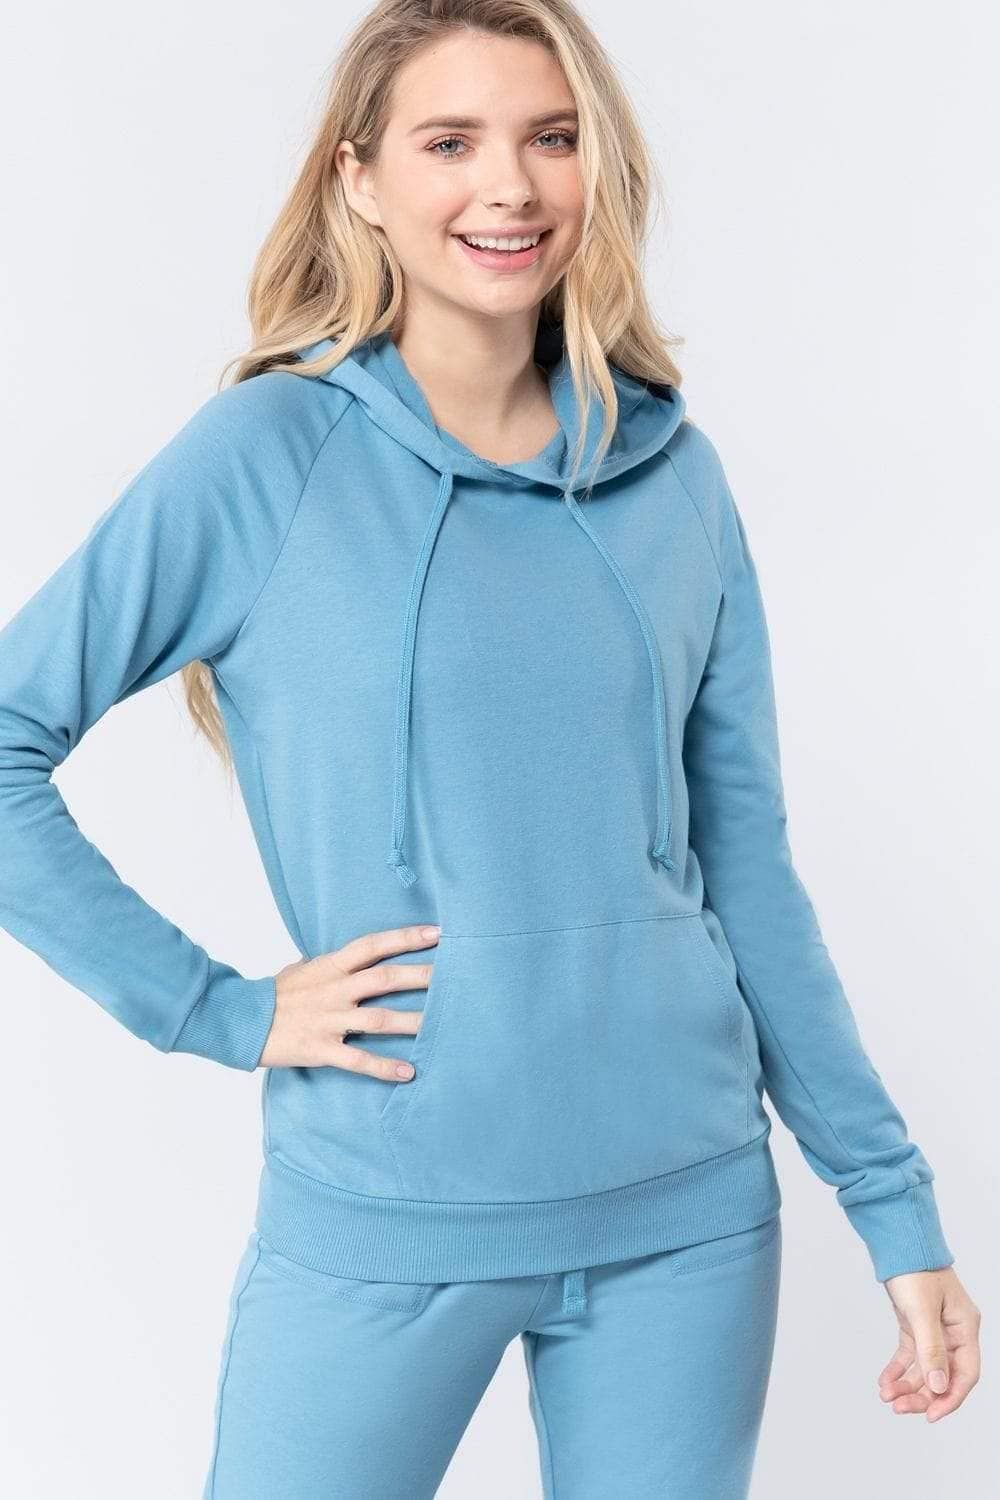 Topaz Long Sleeve Hooded Sweater - Shopping Therapy, LLC Sweatshirt